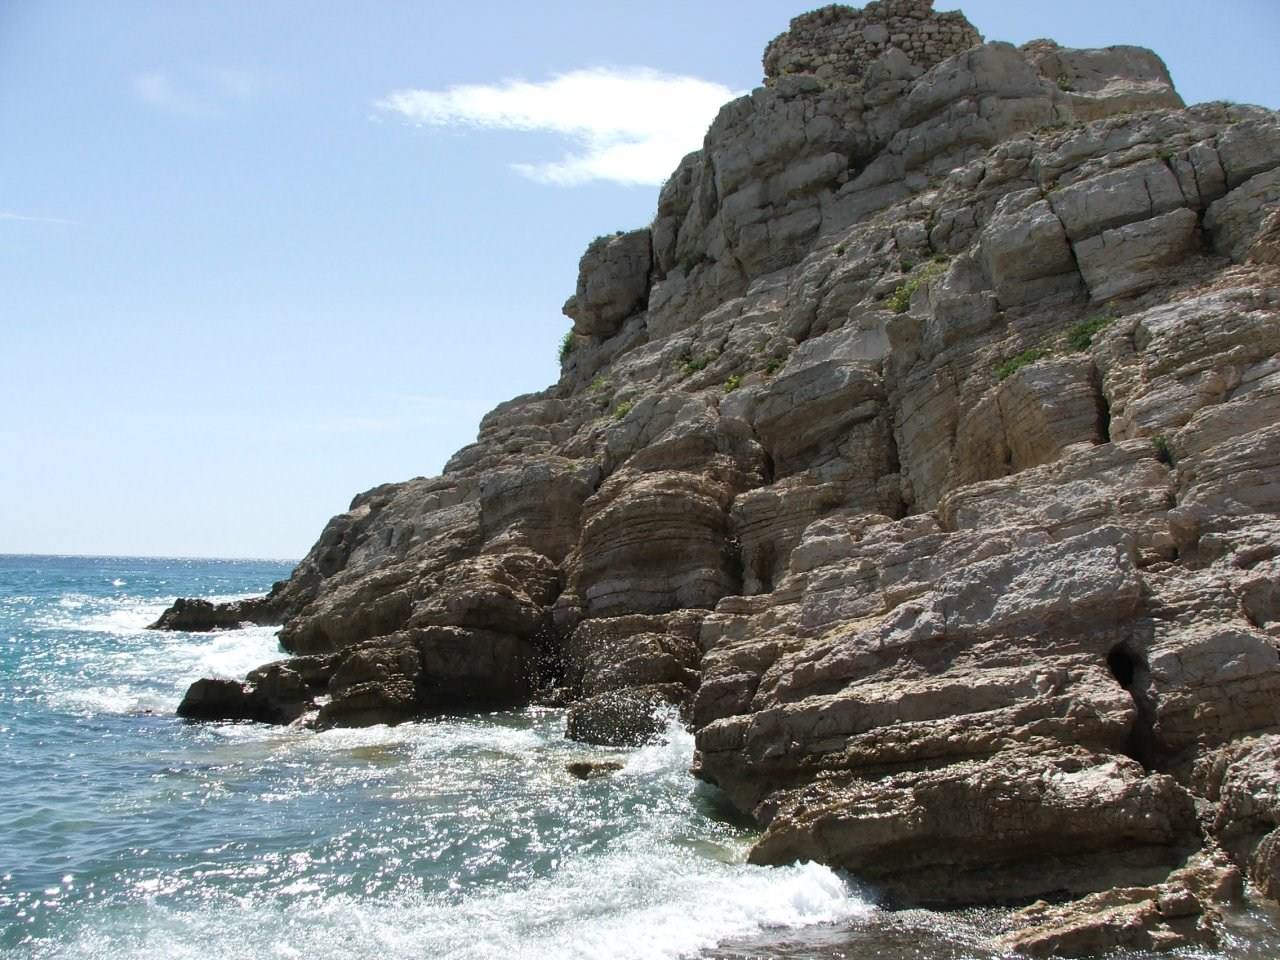 Mers et Oceans Rocks on the beach